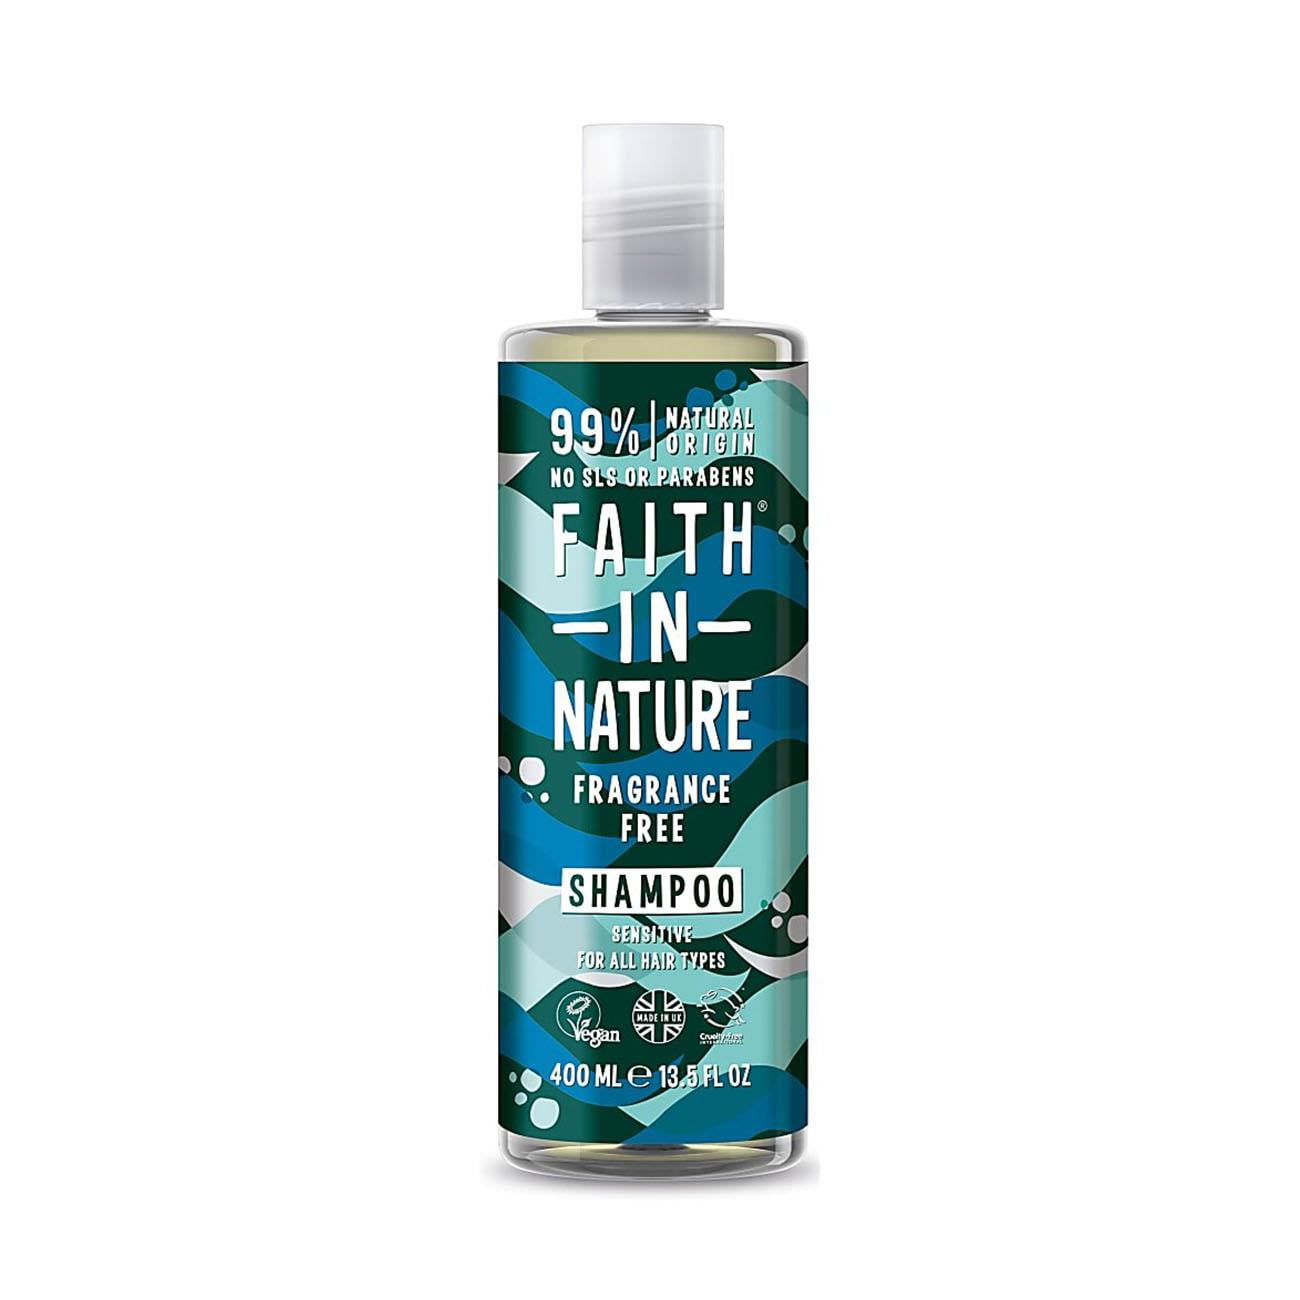 Faith in Nature Natural Fragrance Free Shampoo 13.5floz -